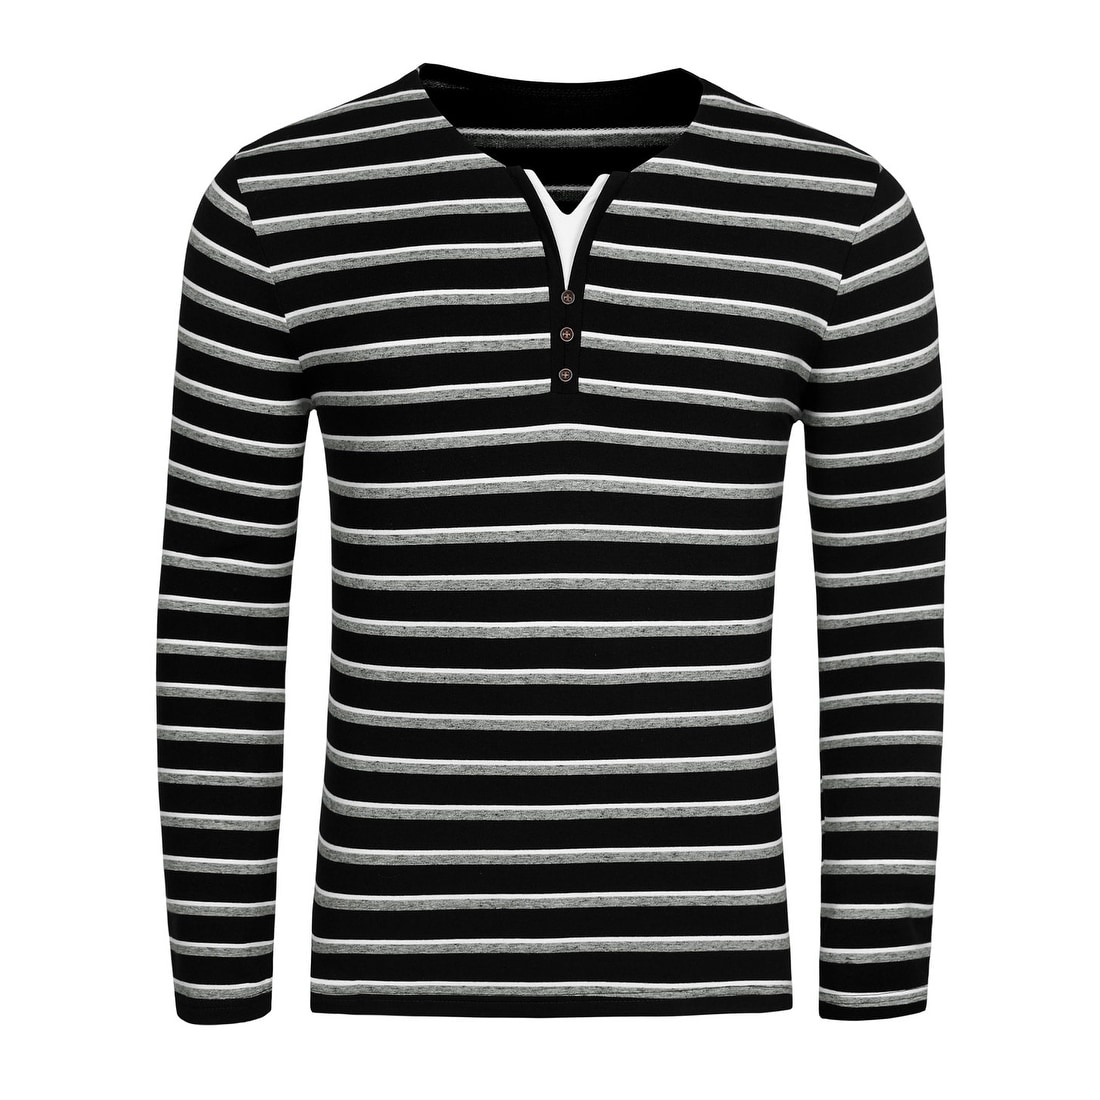 black and white striped shirt mens